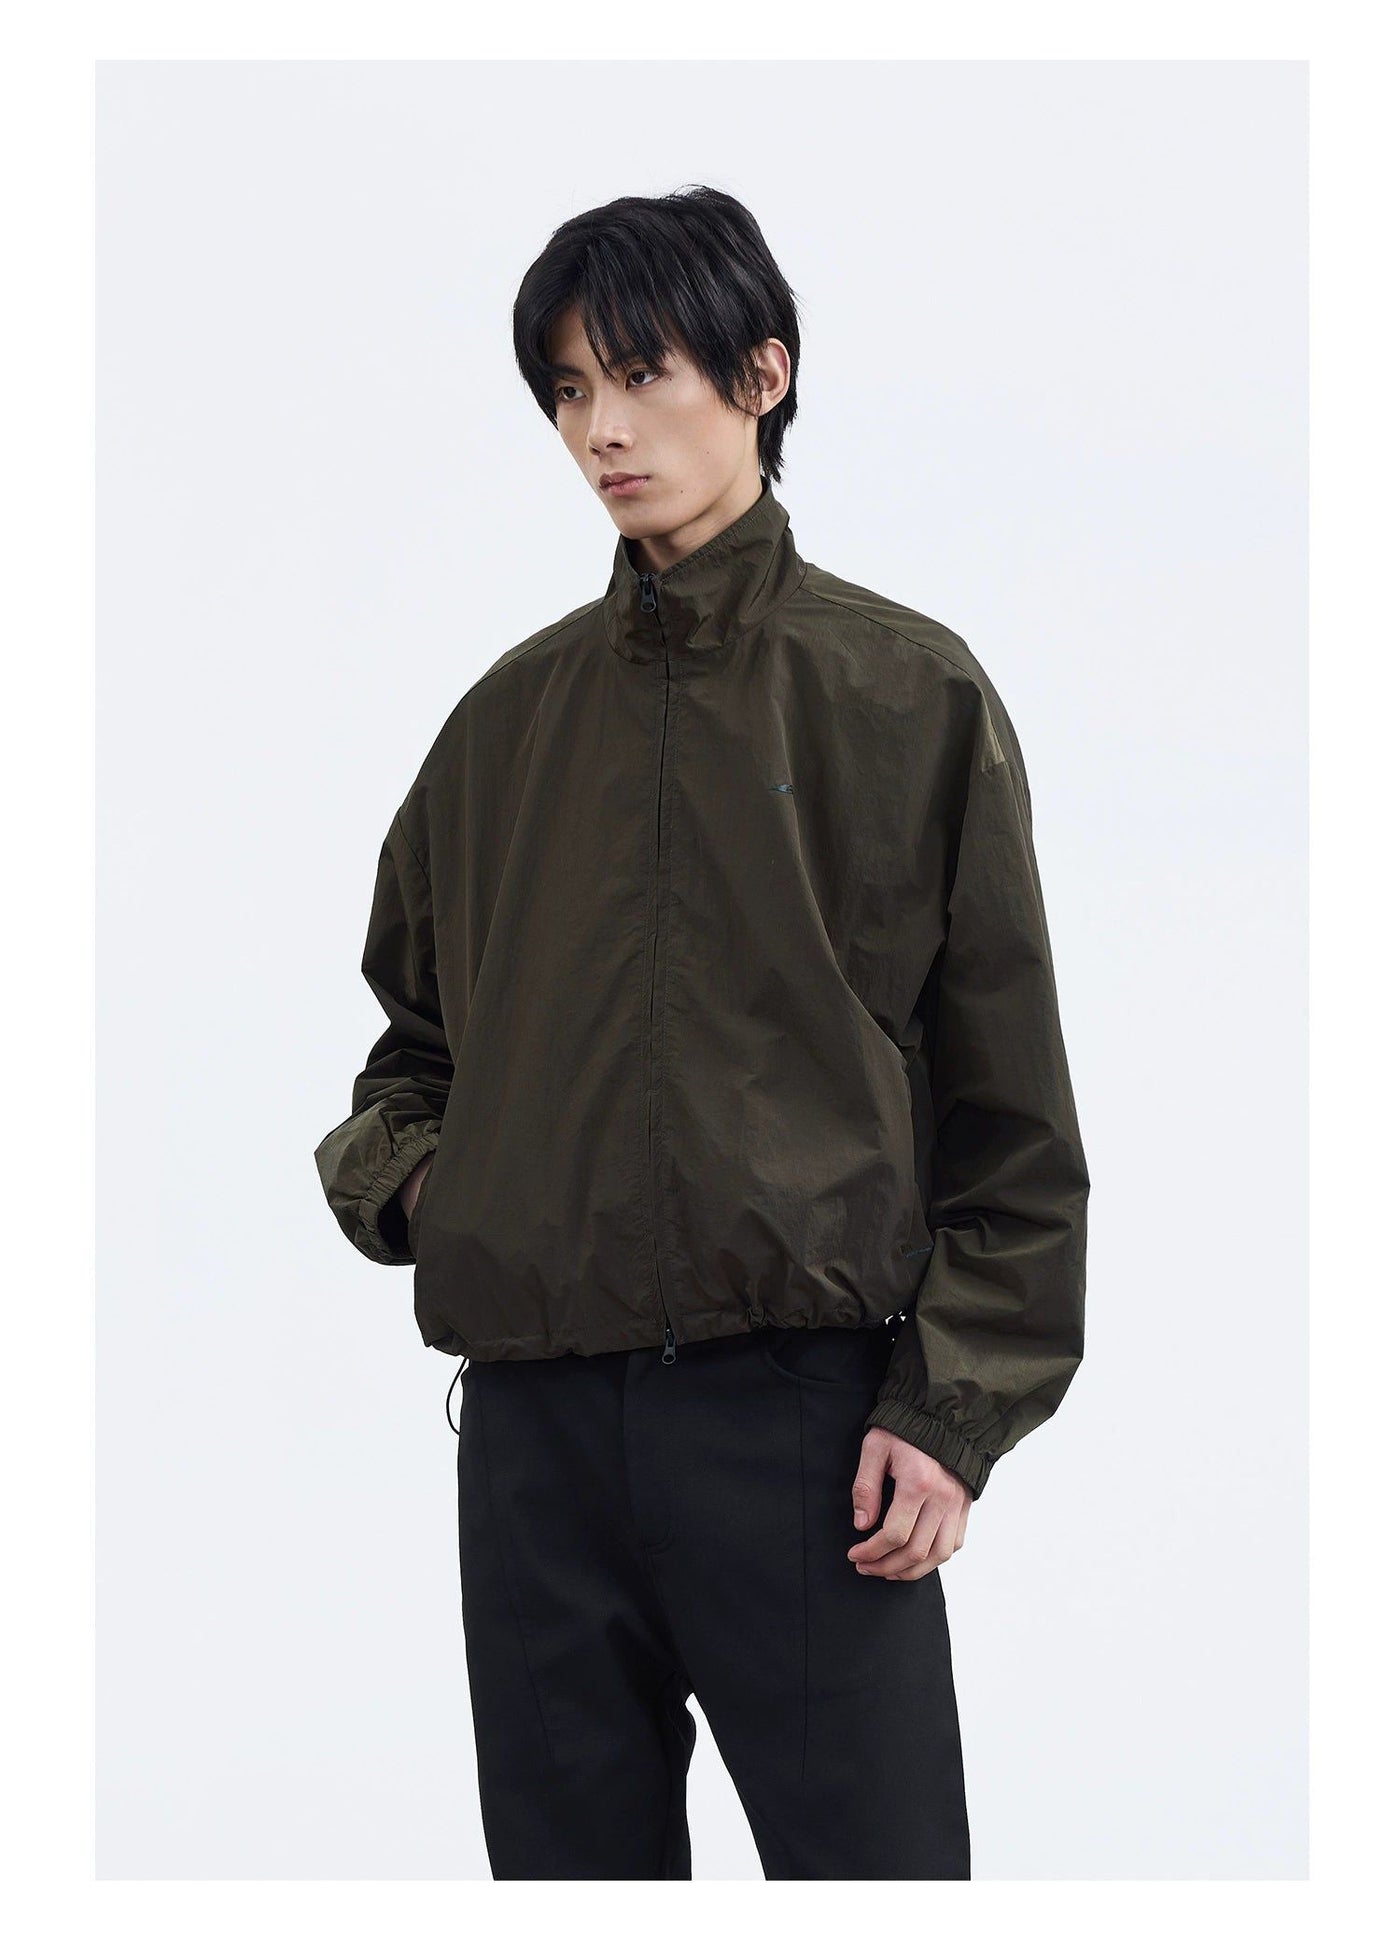 Two Zip Heads Windbreaker Jacket Korean Street Fashion Jacket By Terra Incognita Shop Online at OH Vault